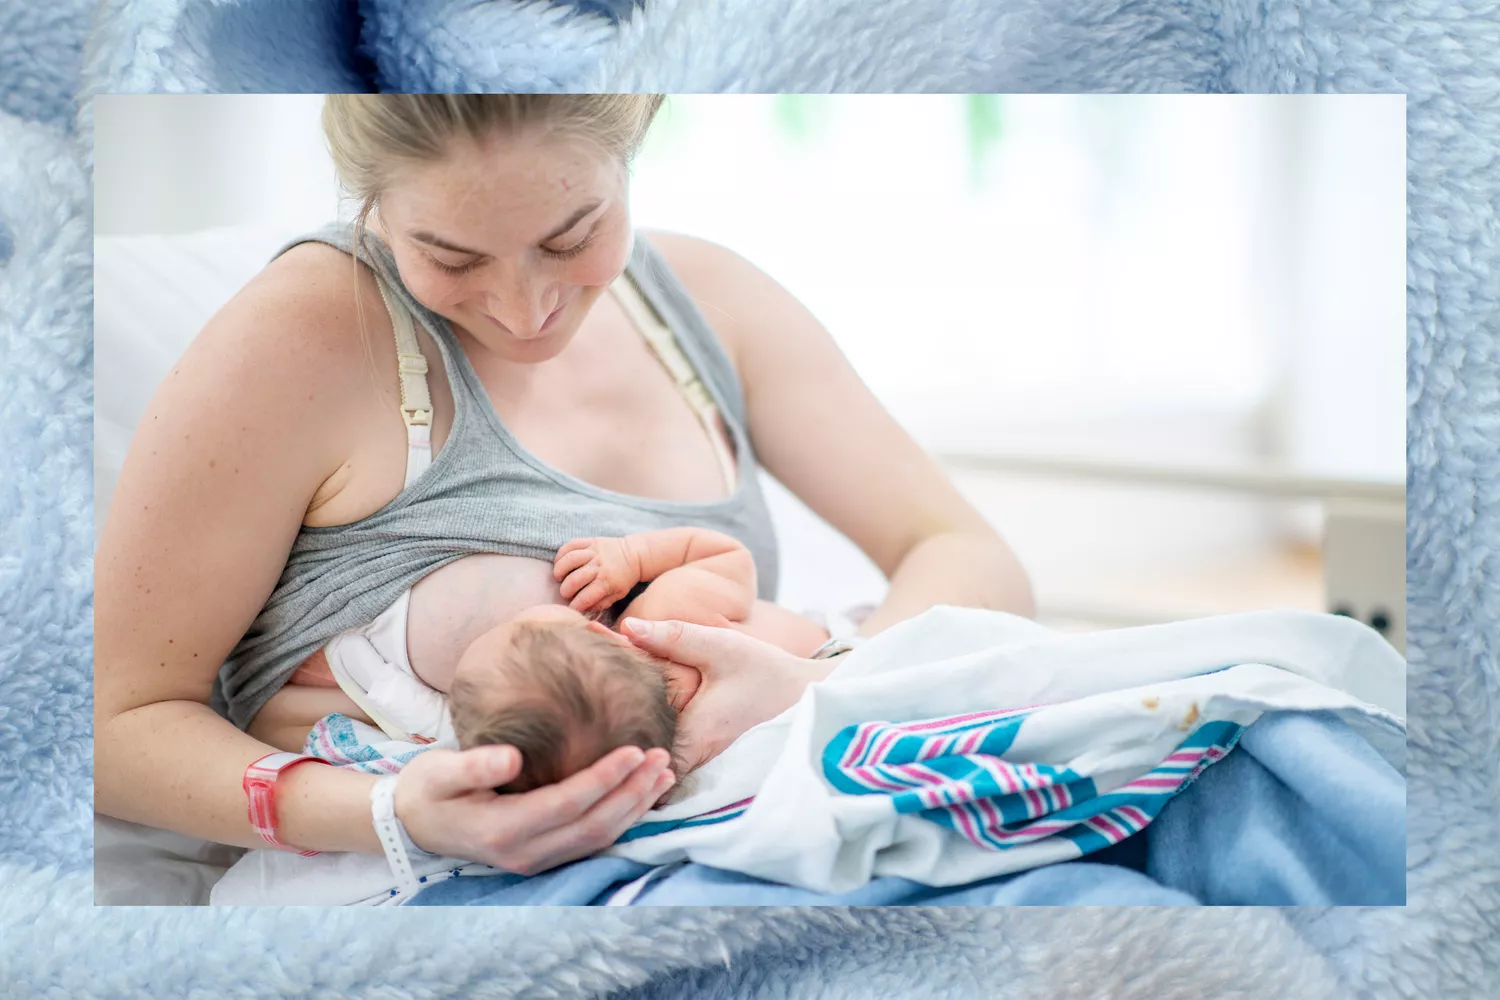 Mother breastfeeding newborn baby in hospital